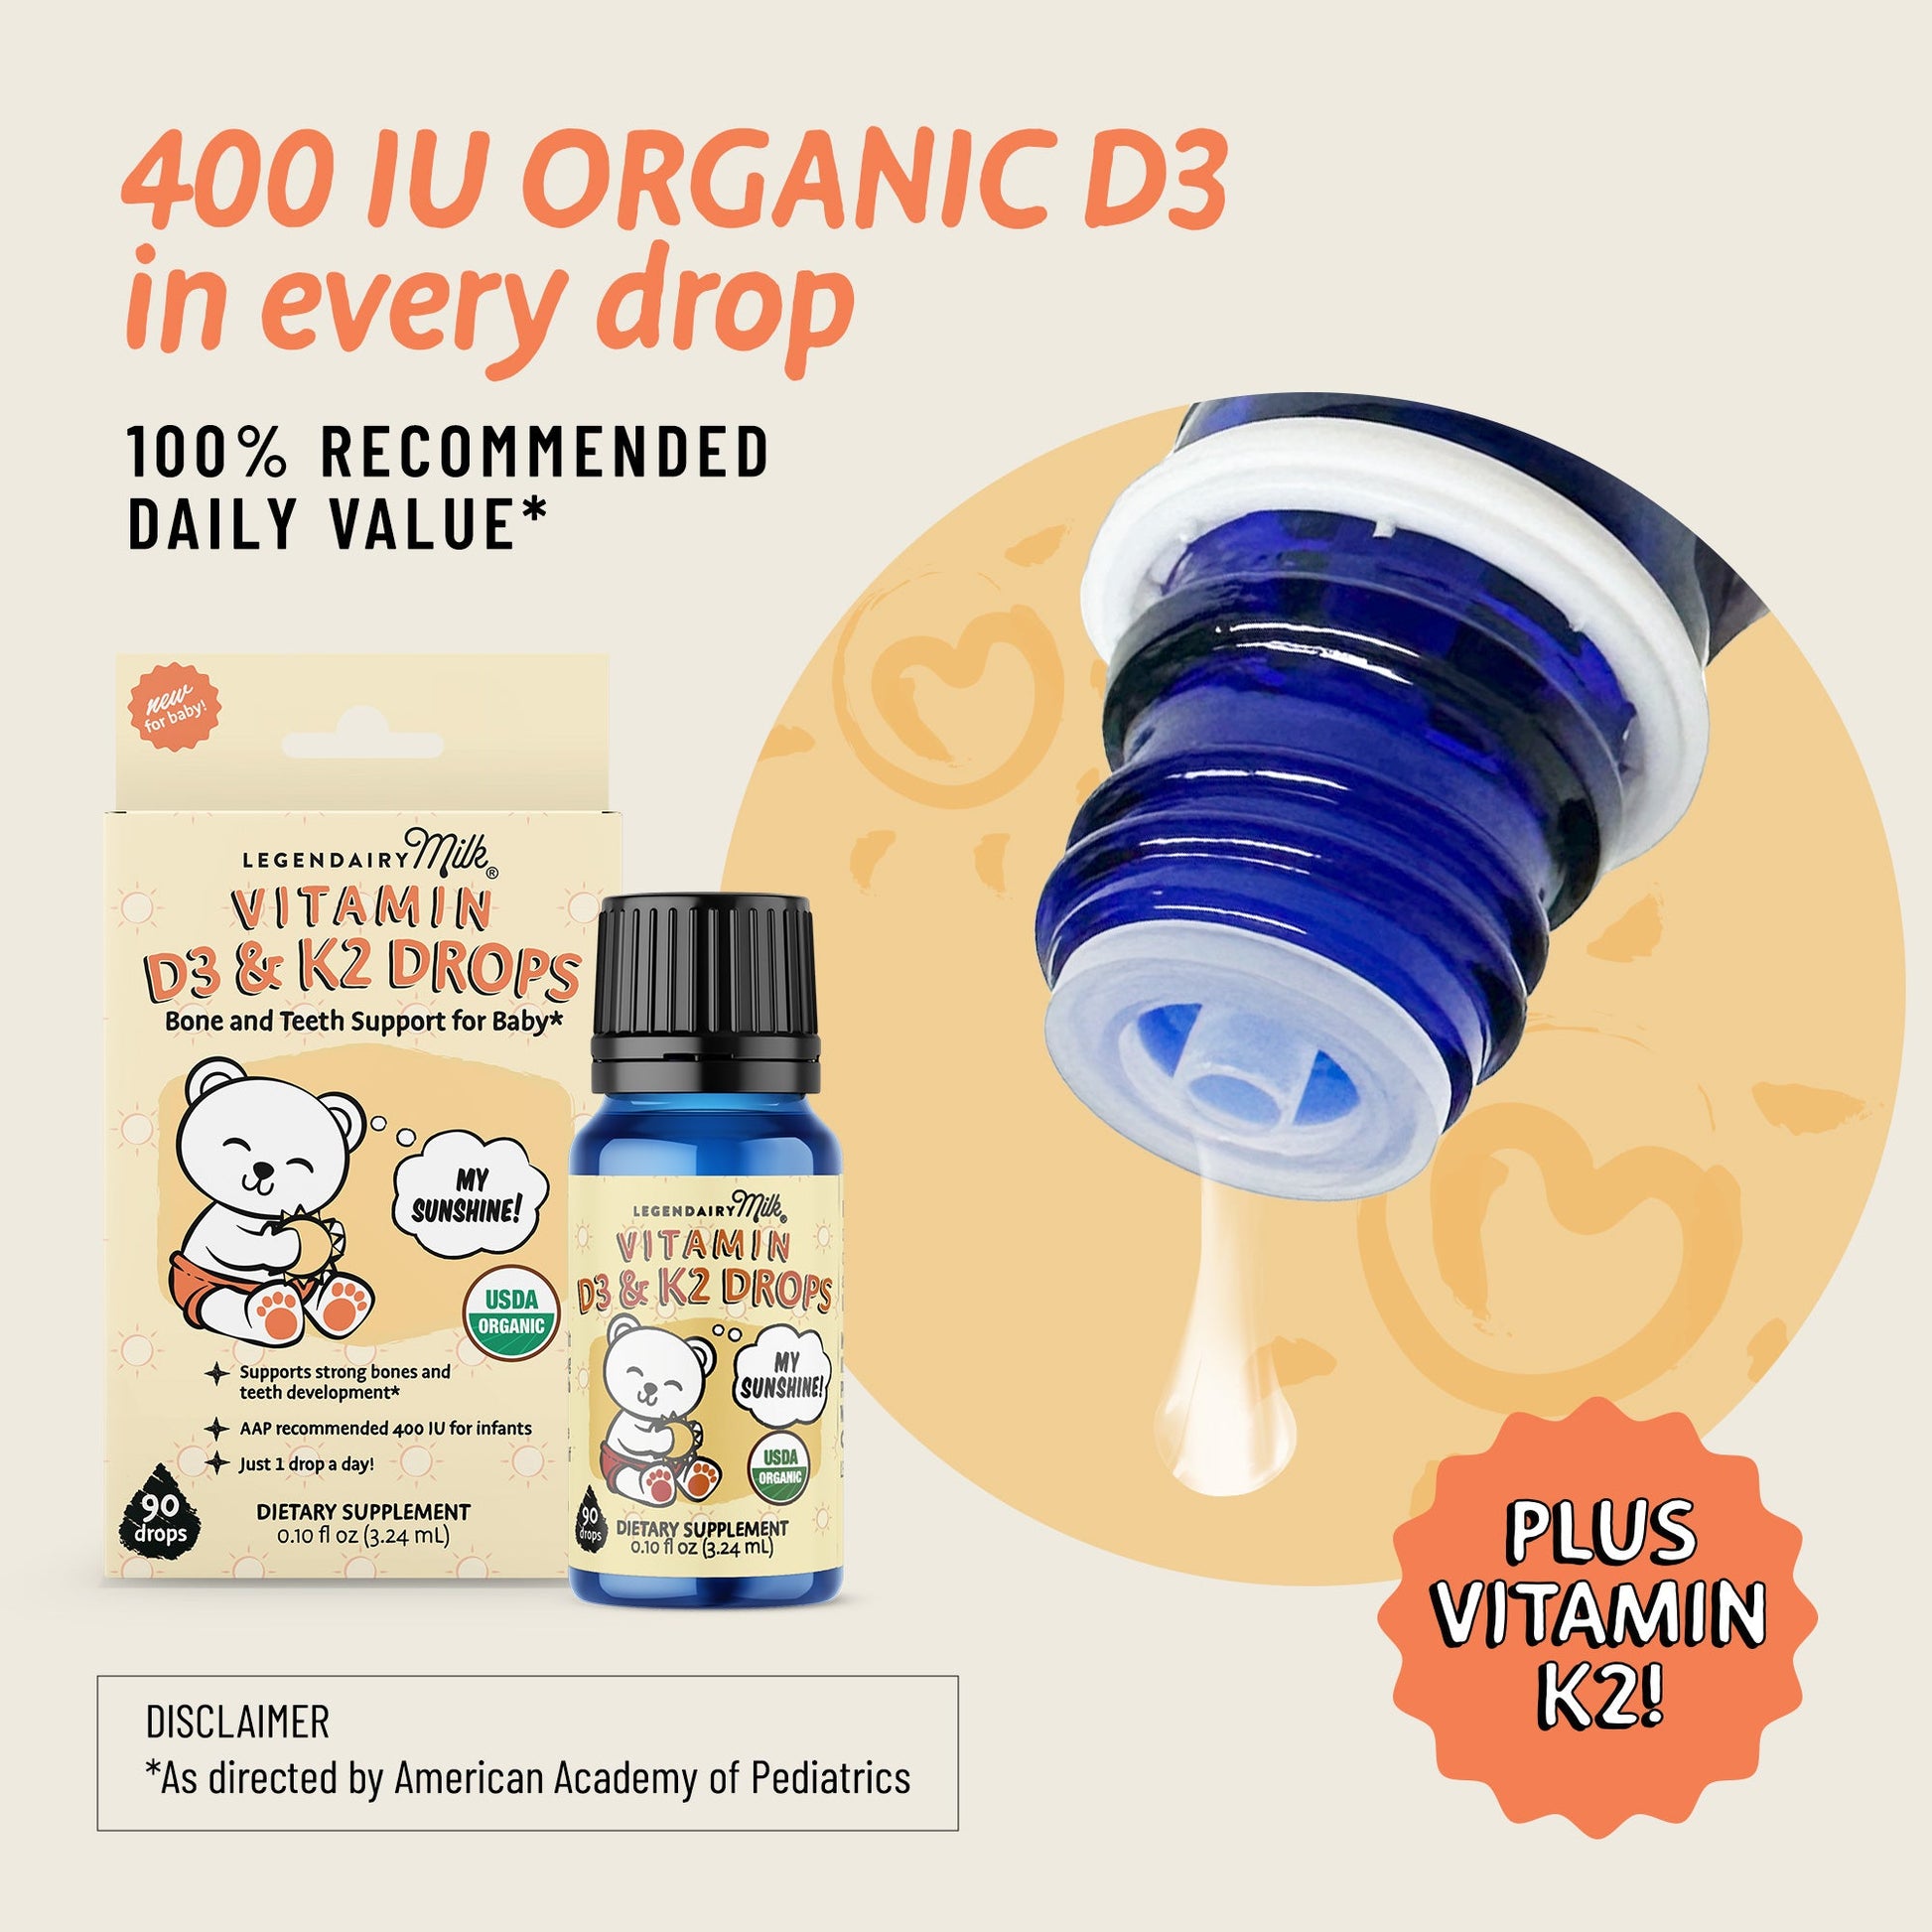 Organic Baby and Toddler D3&K2 Drops - Legendairy Milk